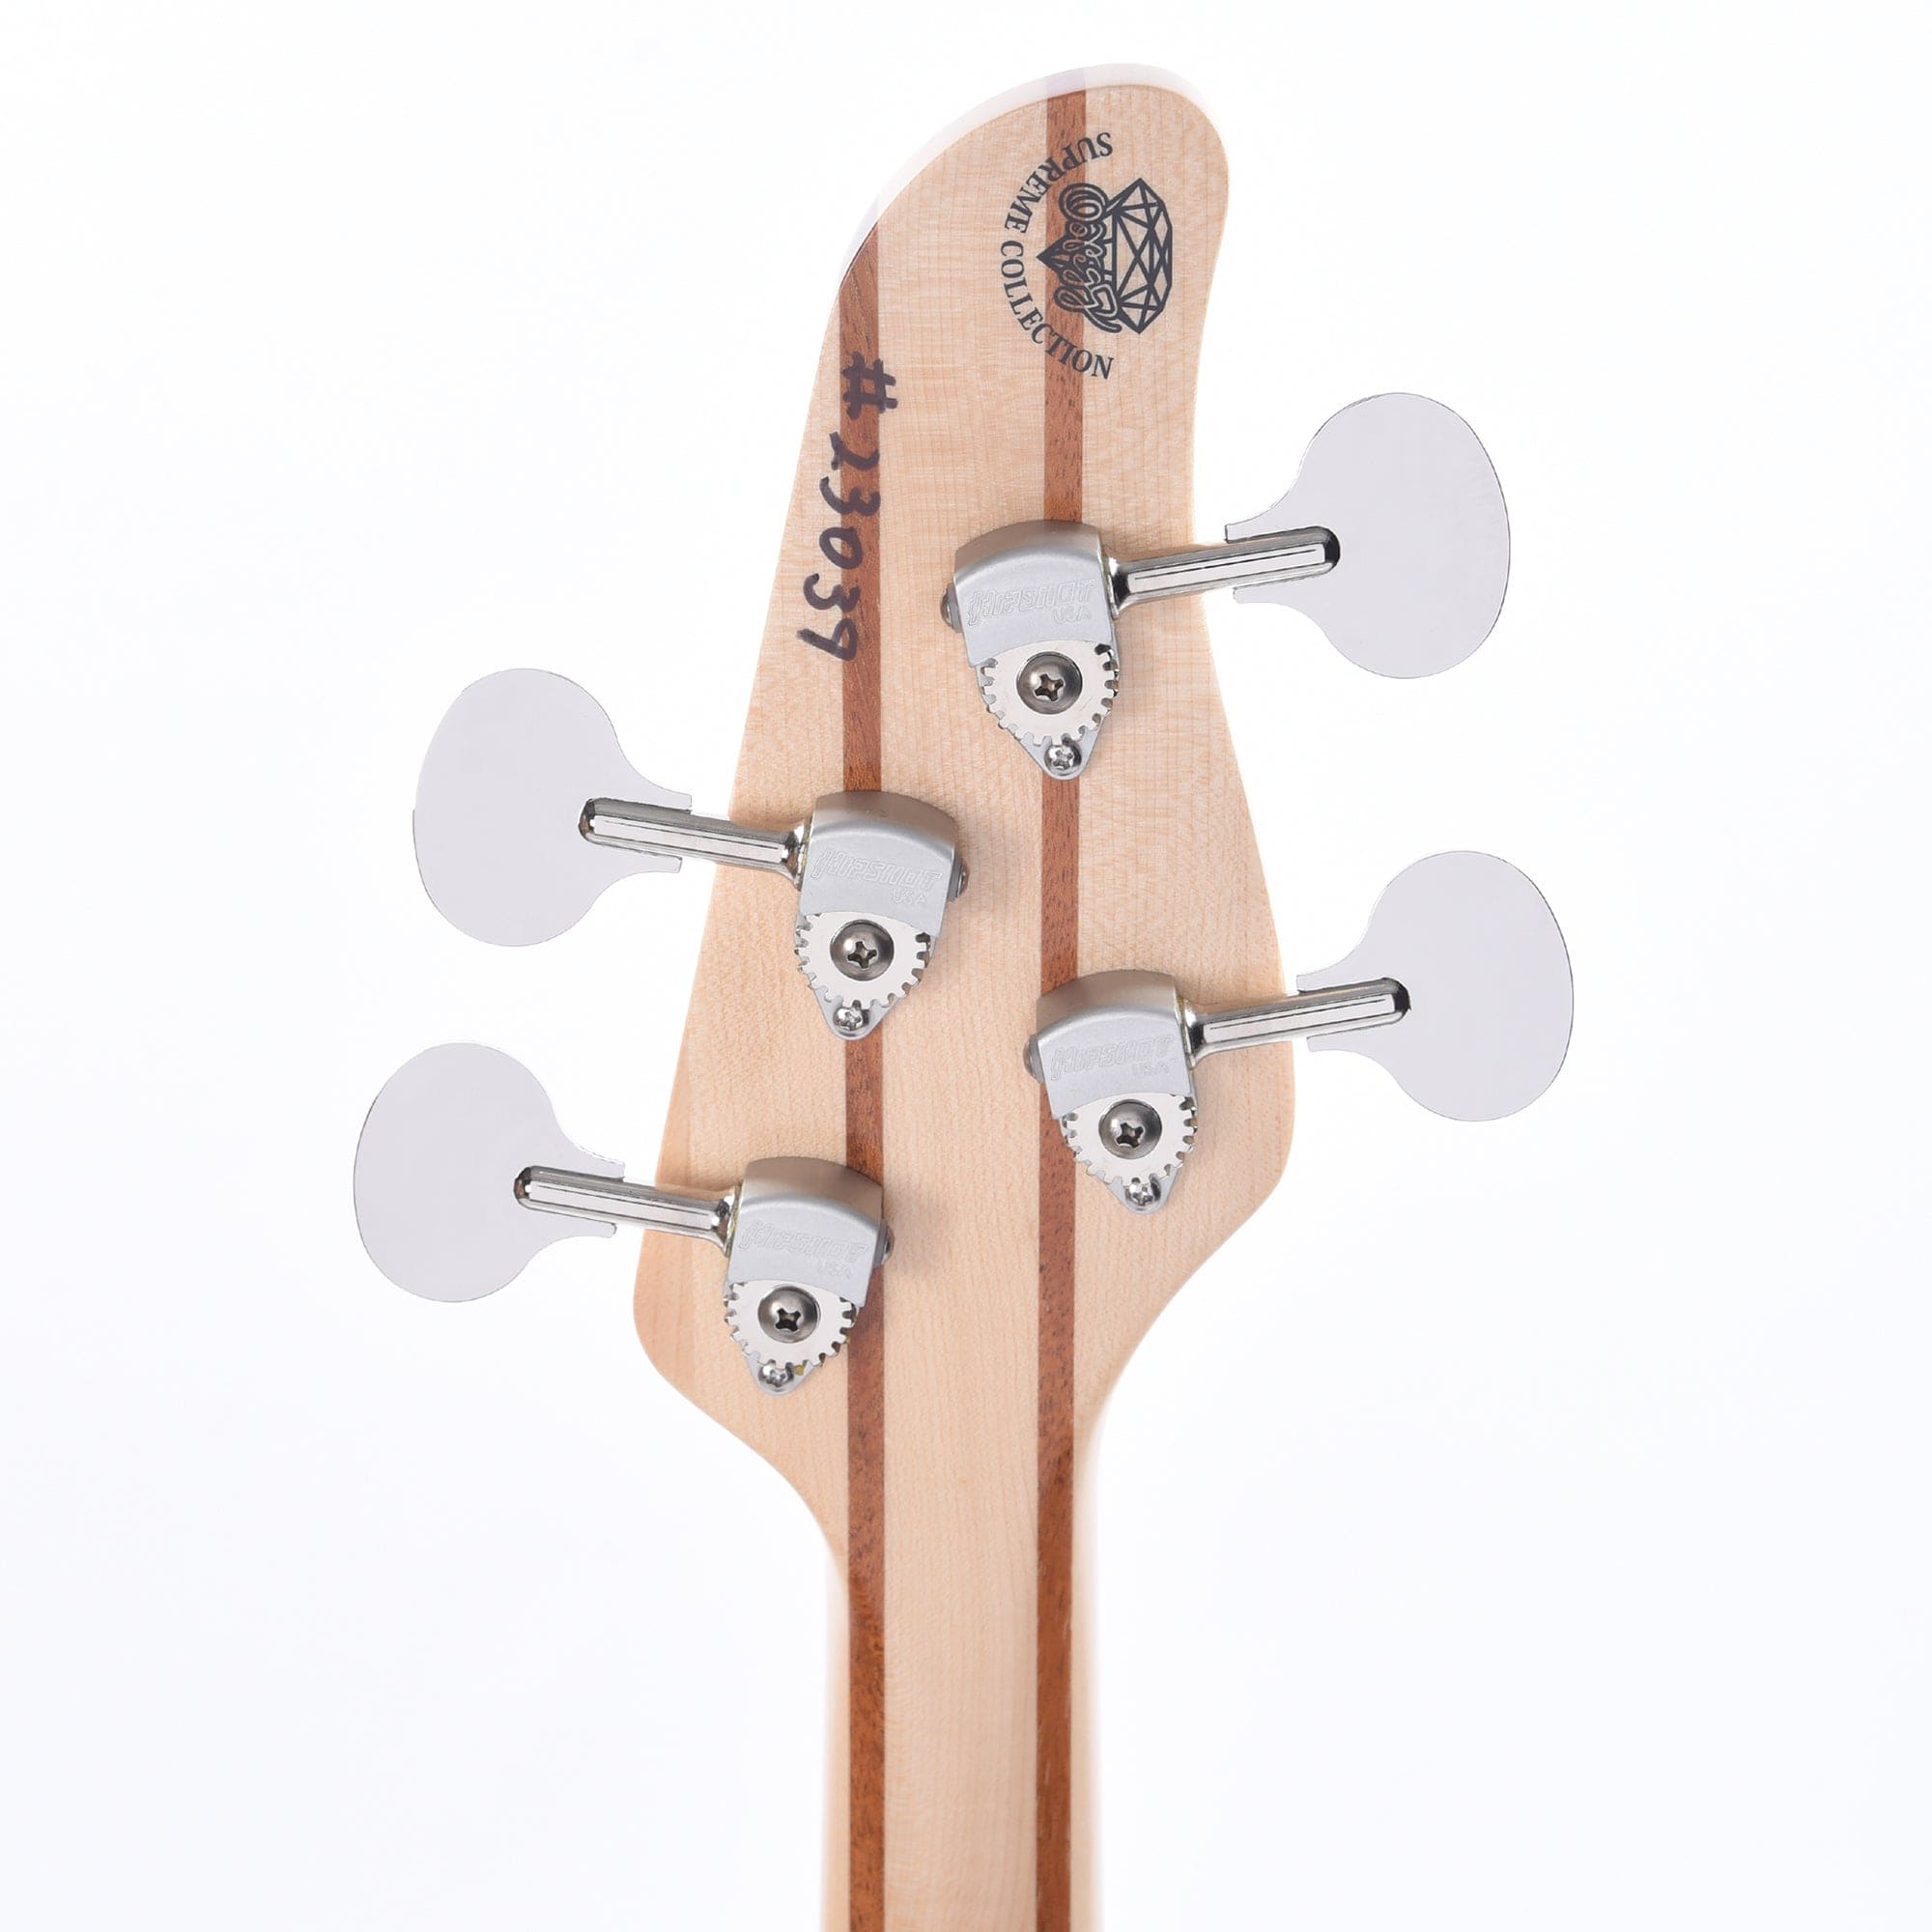 OOPEGG Supreme Collection Stormbreaker Bass Dark Green Metallic Bass Guitars / 4-String